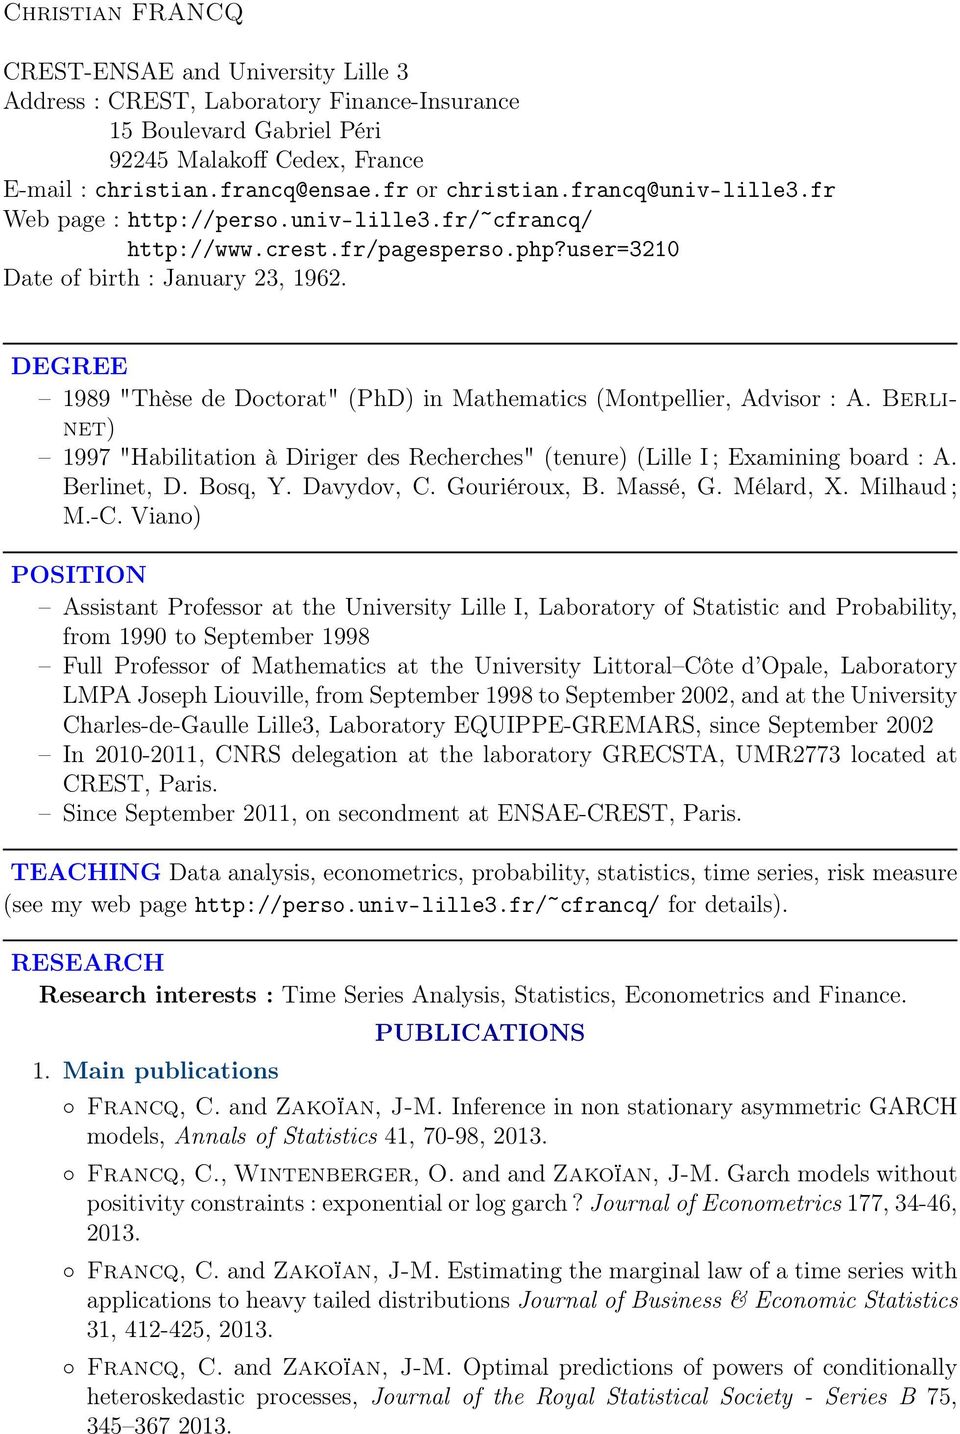 DEGREE 1989 "Thèse de Doctorat" (PhD) in Mathematics (Montpellier, Advisor : A. Berlinet) 1997 "Habilitation à Diriger des Recherches" (tenure) (Lille I ; Examining board : A. Berlinet, D. Bosq, Y.